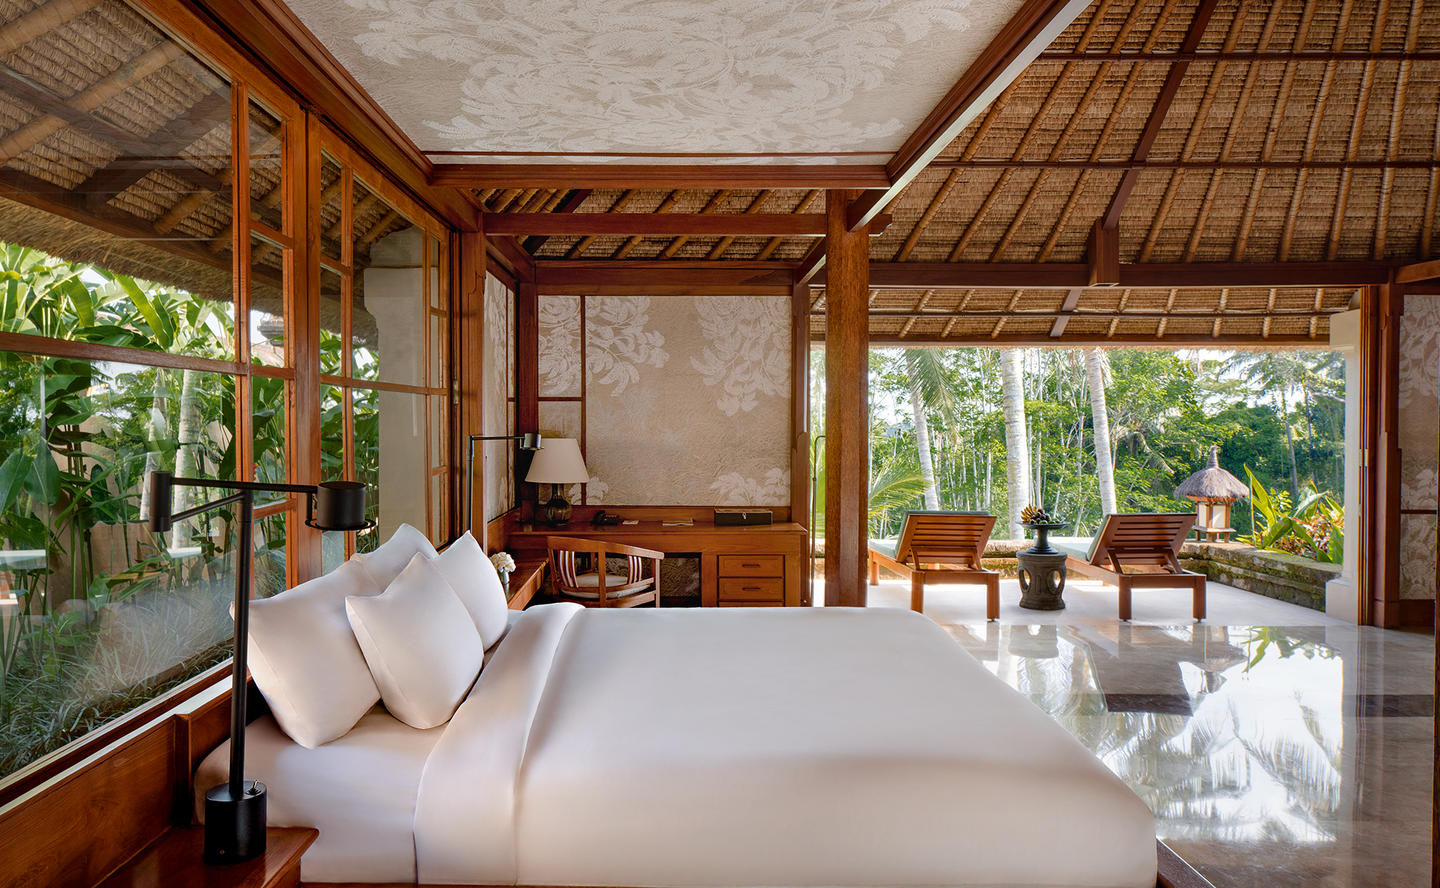 Bedroom, Village Suite - Amandari, Bali